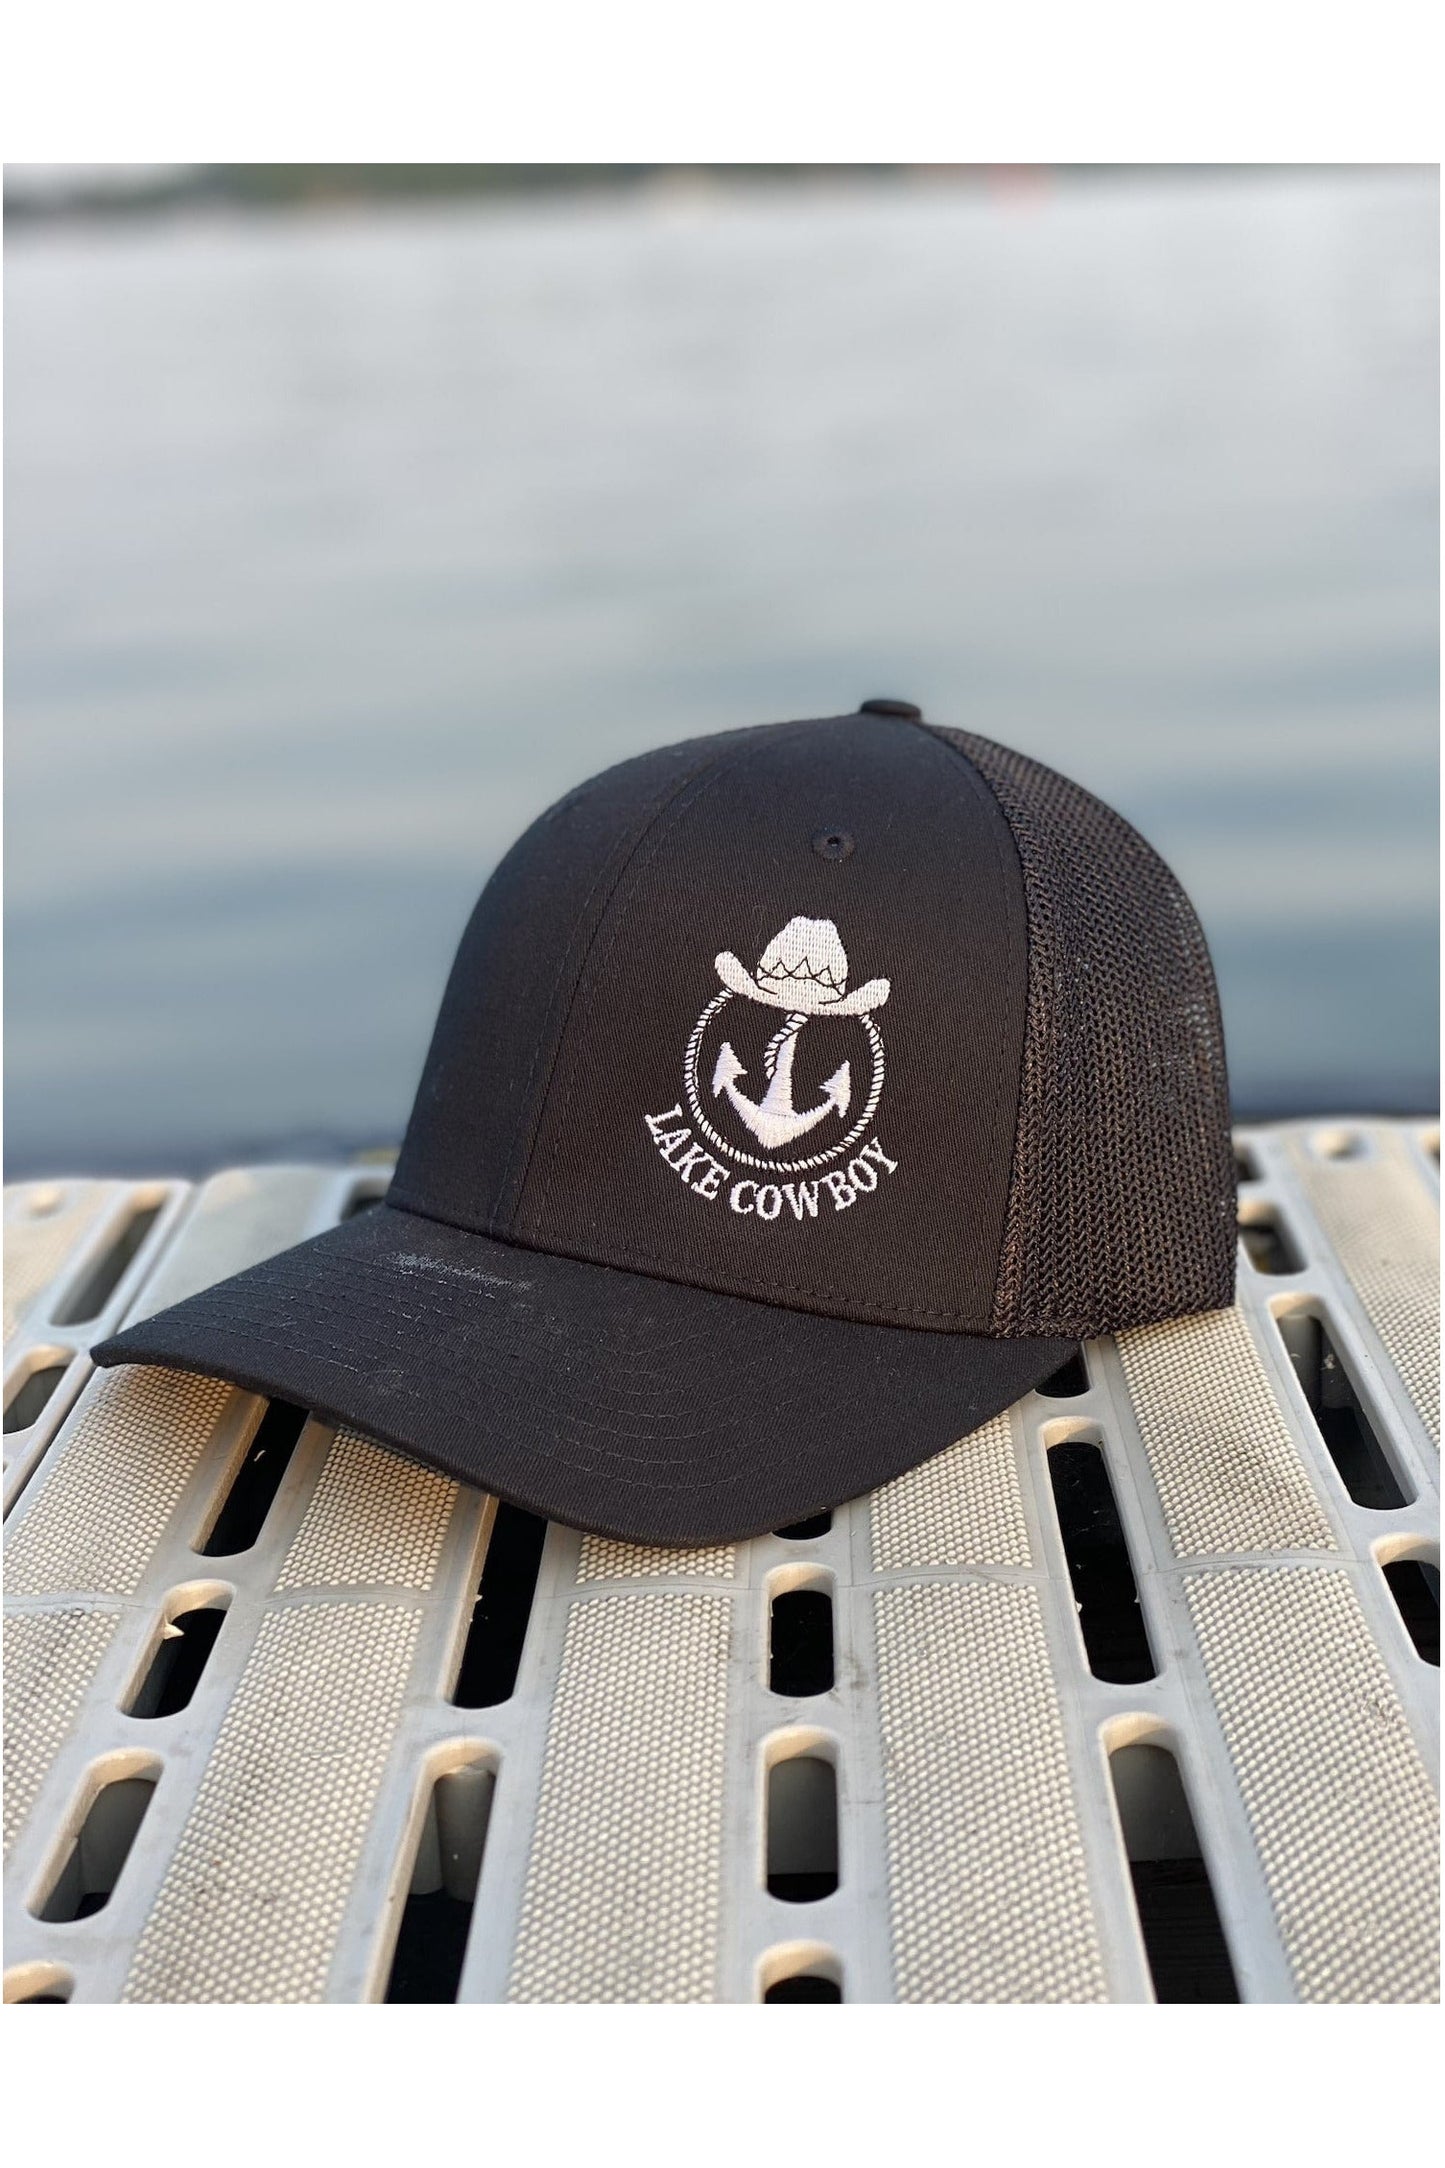 Photo of a Lake Cowboy Baseball Hat (All Black) on a dock on Lake Minnetonka